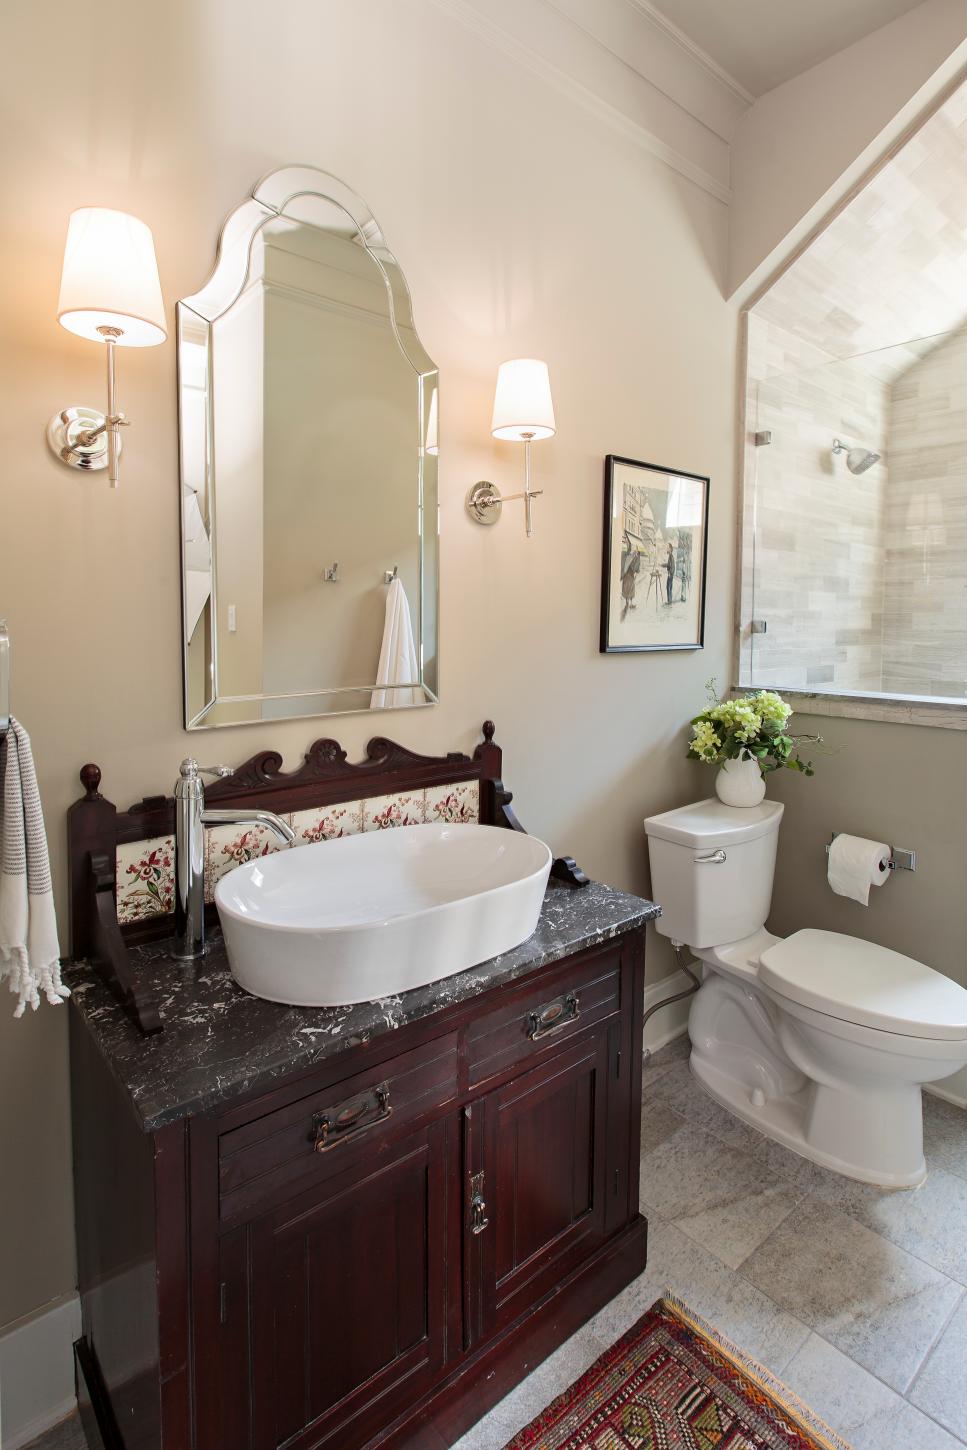 New Bathroom Features Antique Vanity With Original Tilework | HGTV